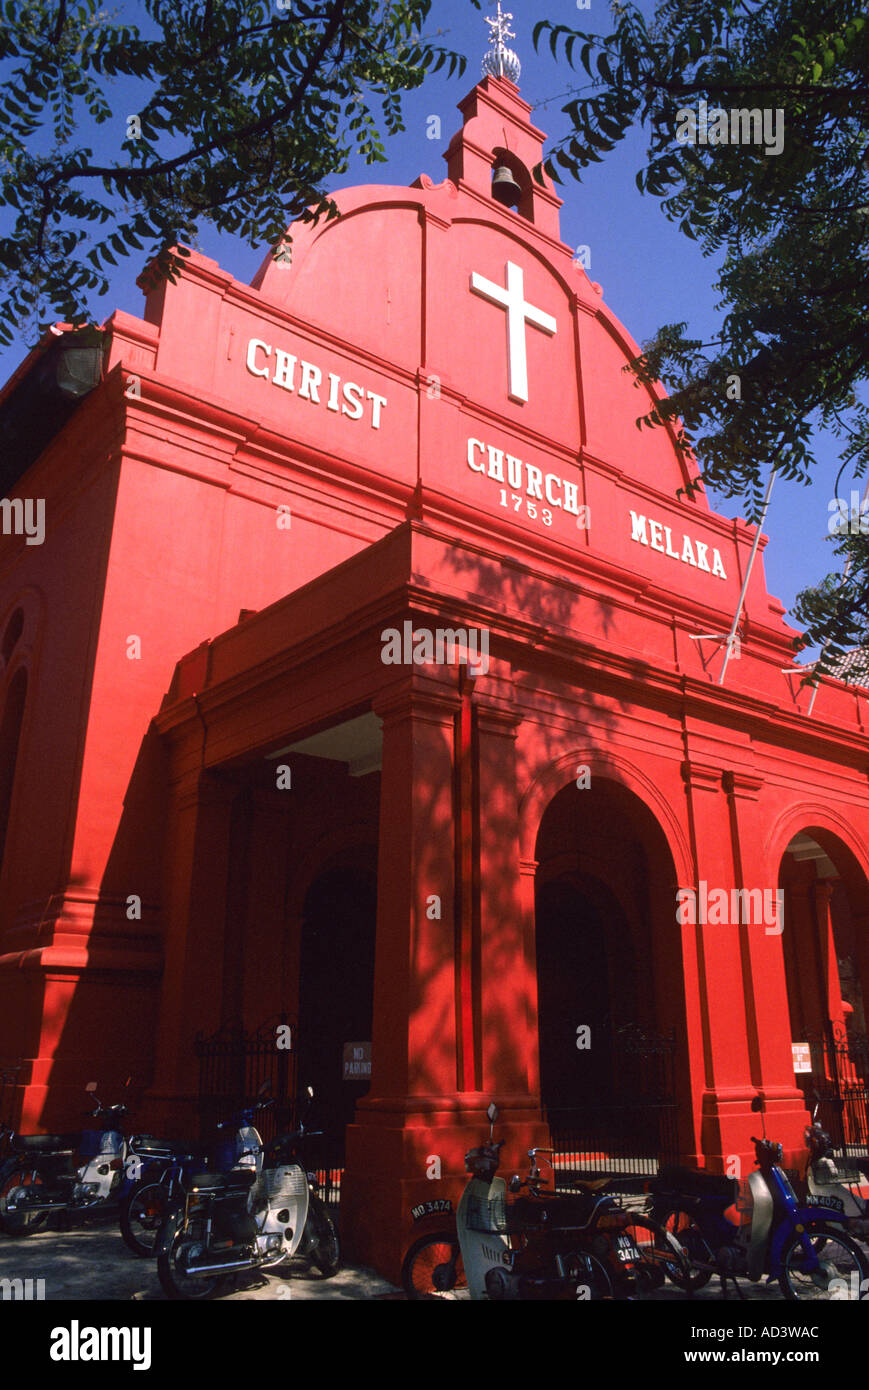 Christ Church à Melaka en Malaisie Banque D'Images